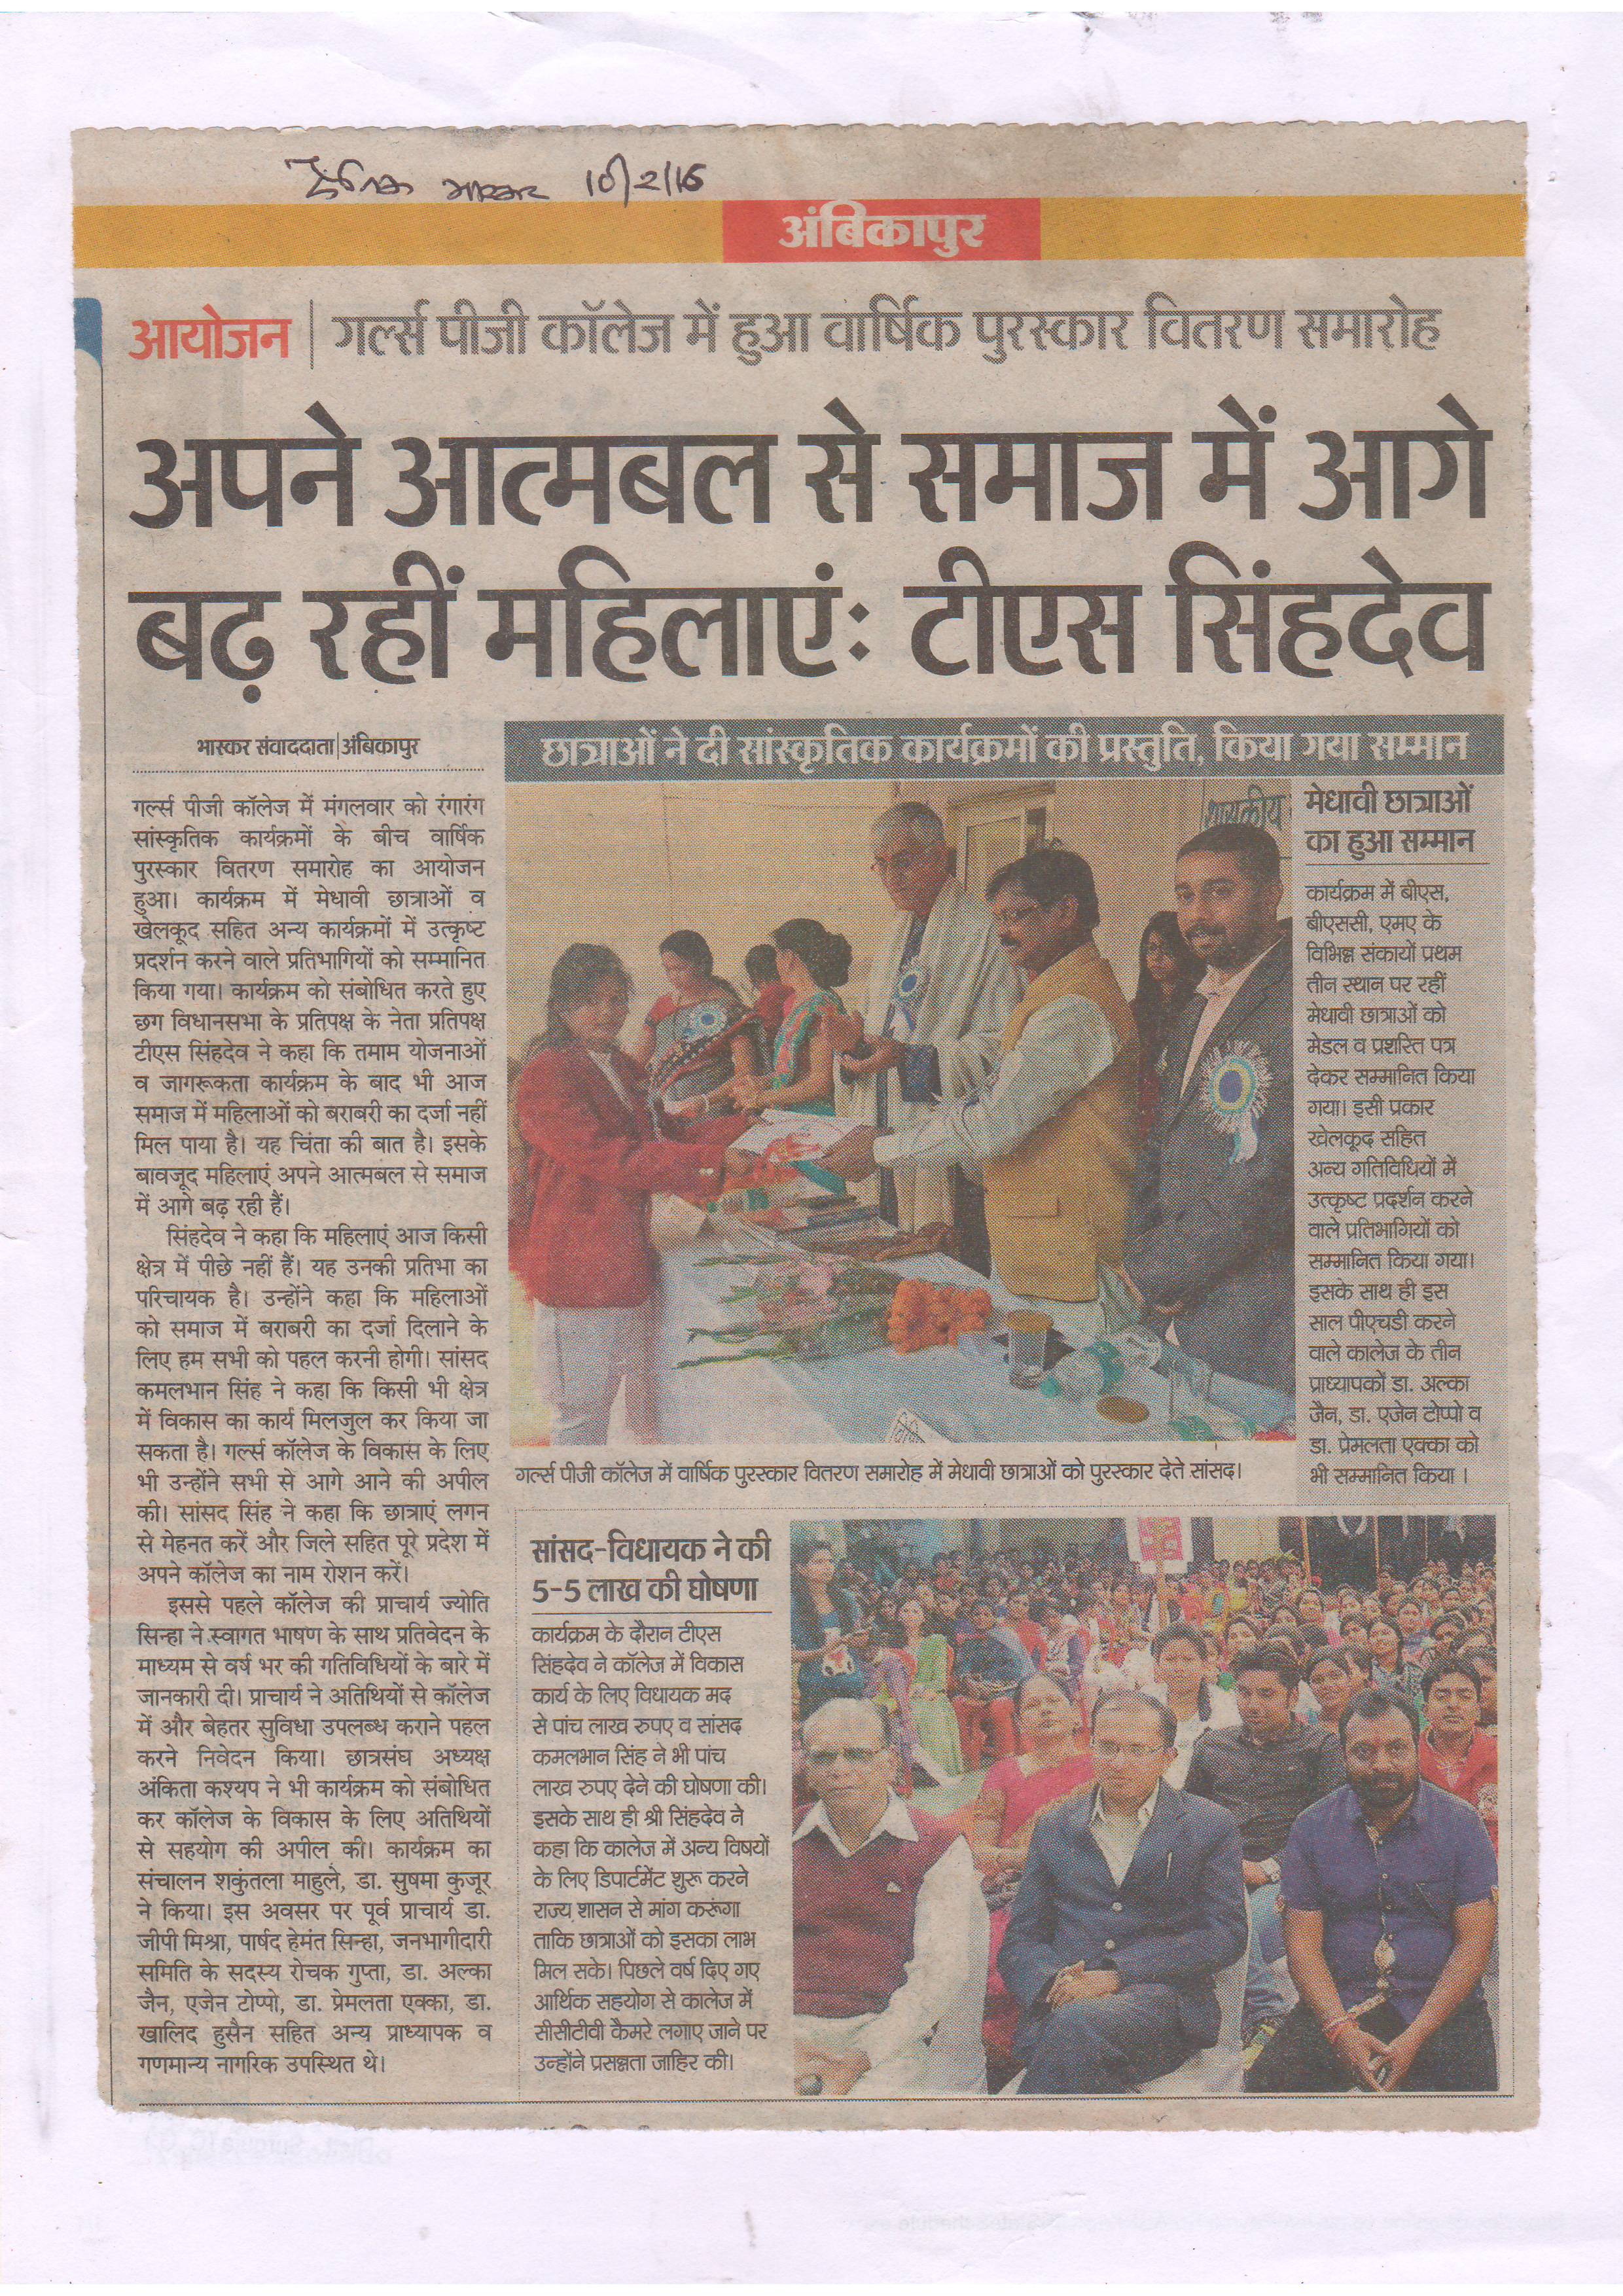 गर्ल्स पी जी कॉलेज में हुआ वार्षिक पुरस्कार वितरण समारोह - Govt Rajmohini Devi Girls PG College, Ambikapur